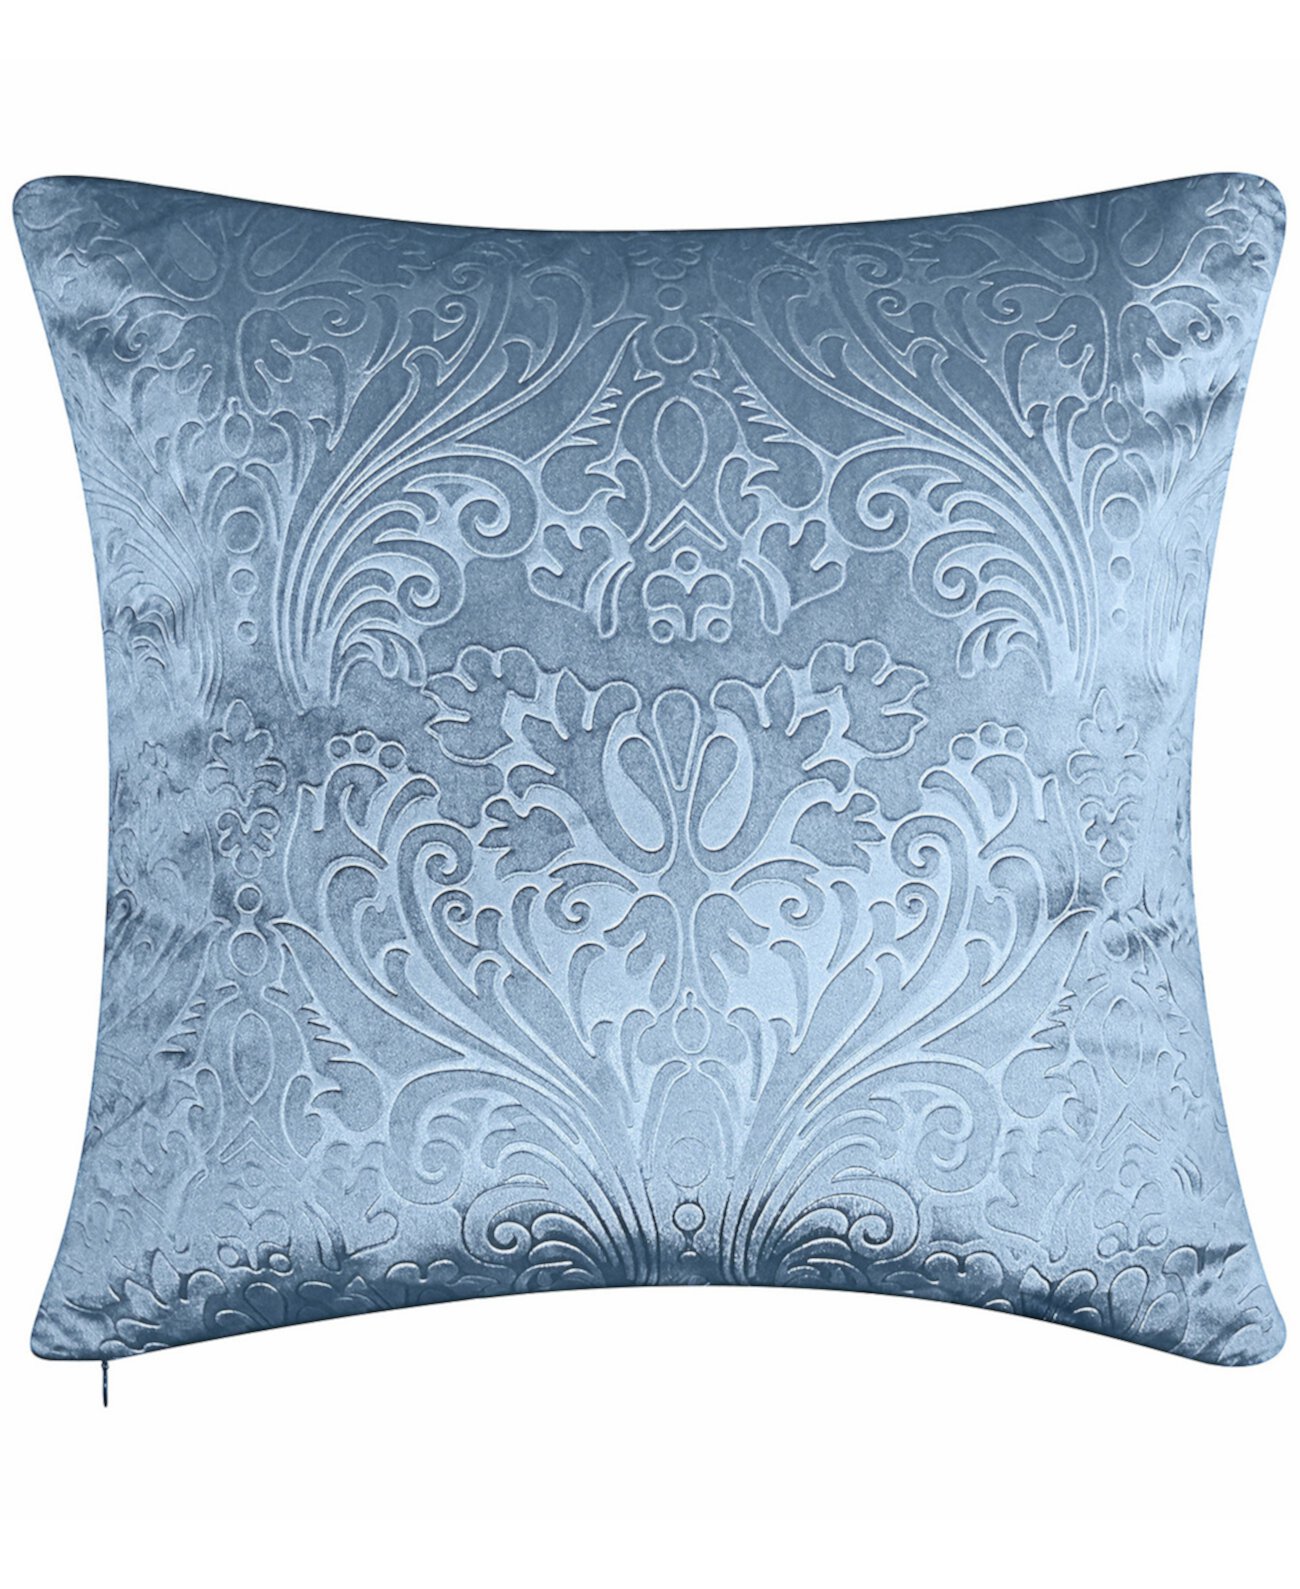 Декоративная подушка Panne Velvet с тиснением, 20 x 20 дюймов Edie@Home